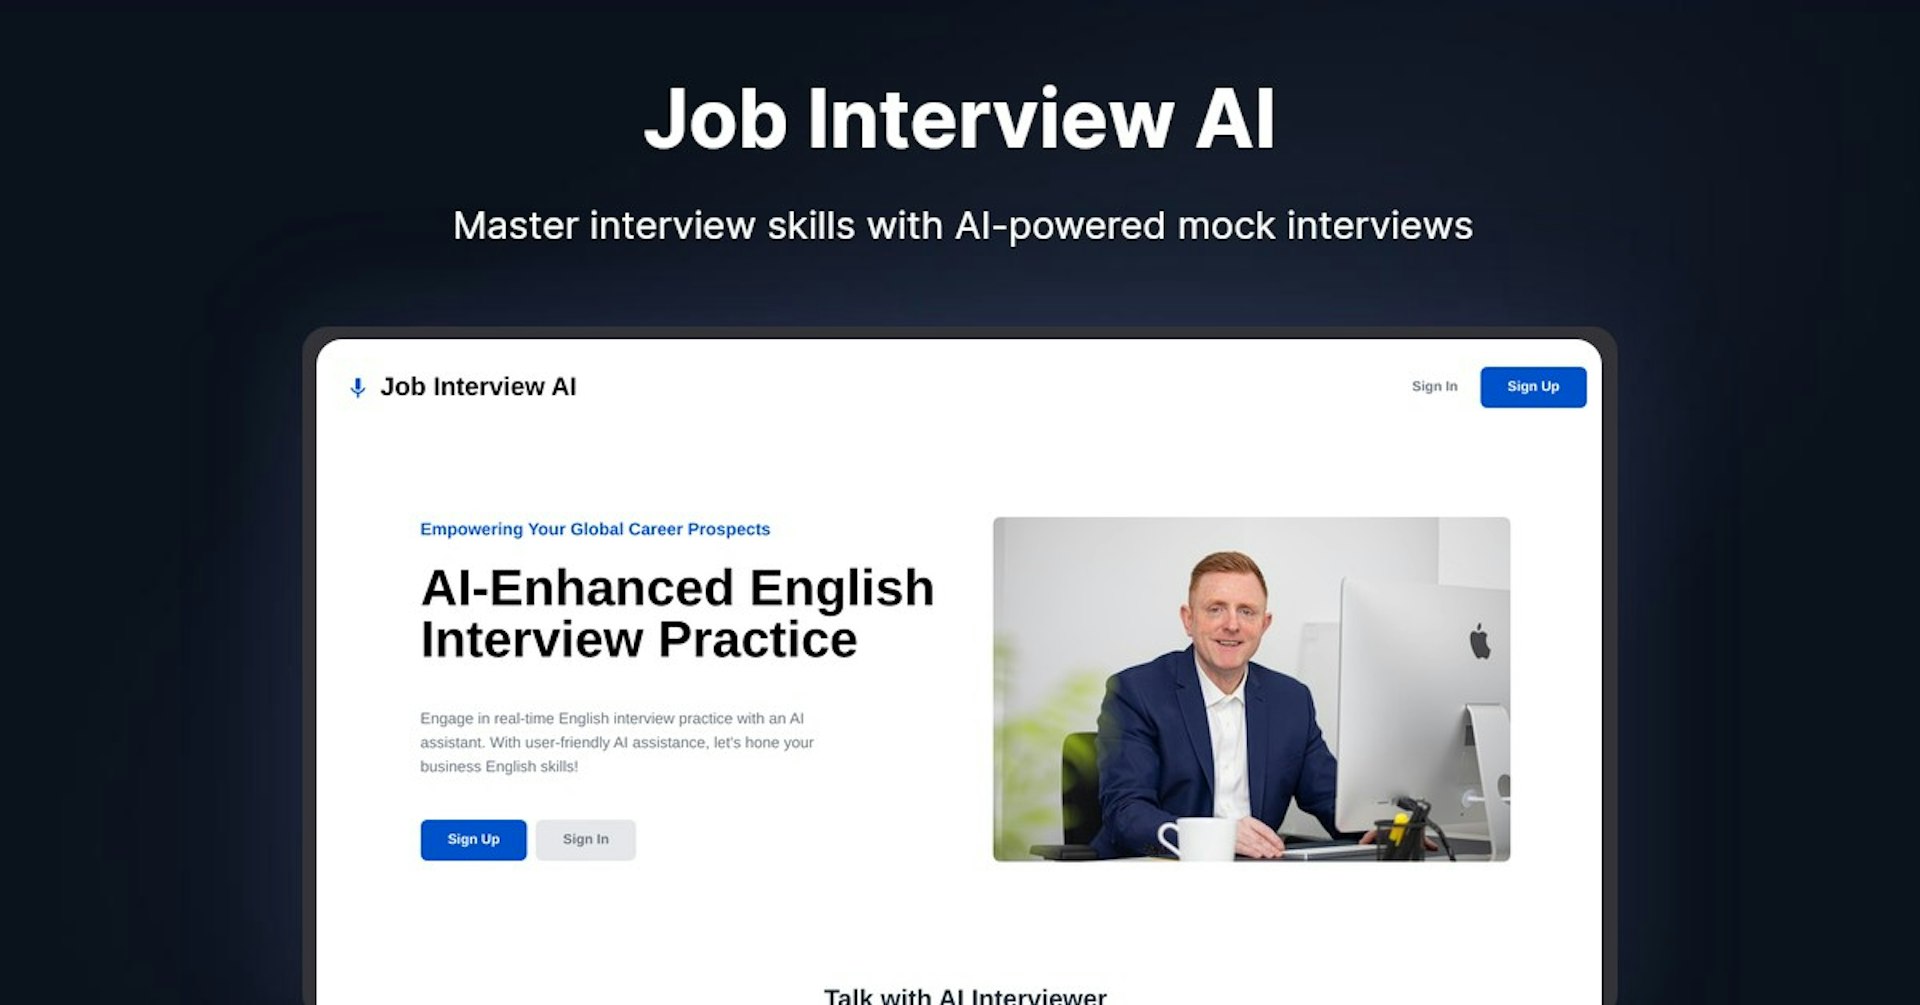 Job Interview AI